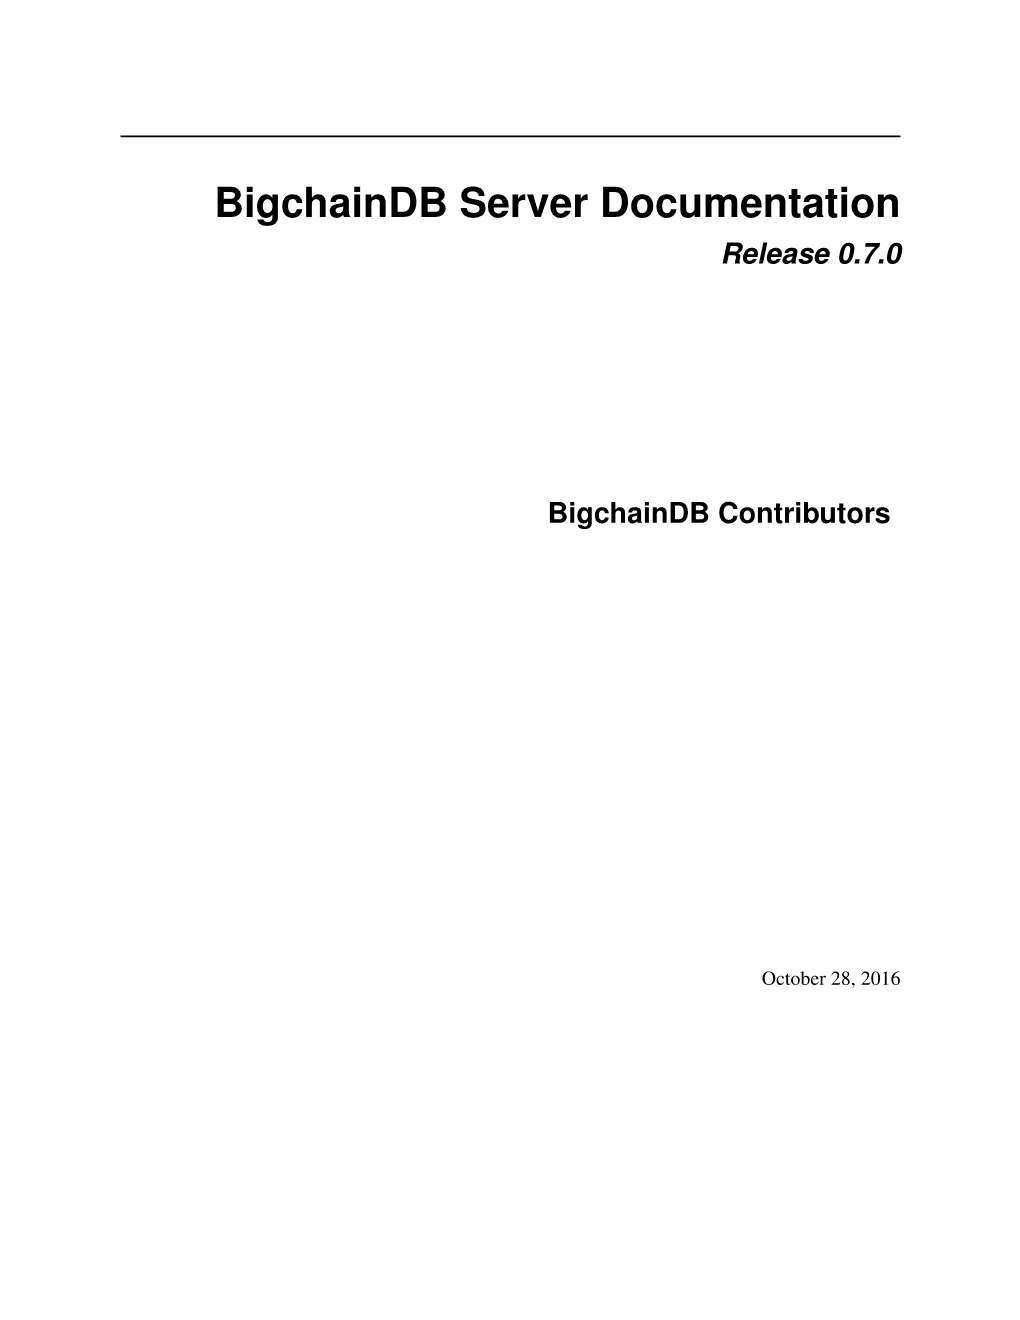 Bigchaindb Server Documentation Release 0.7.0